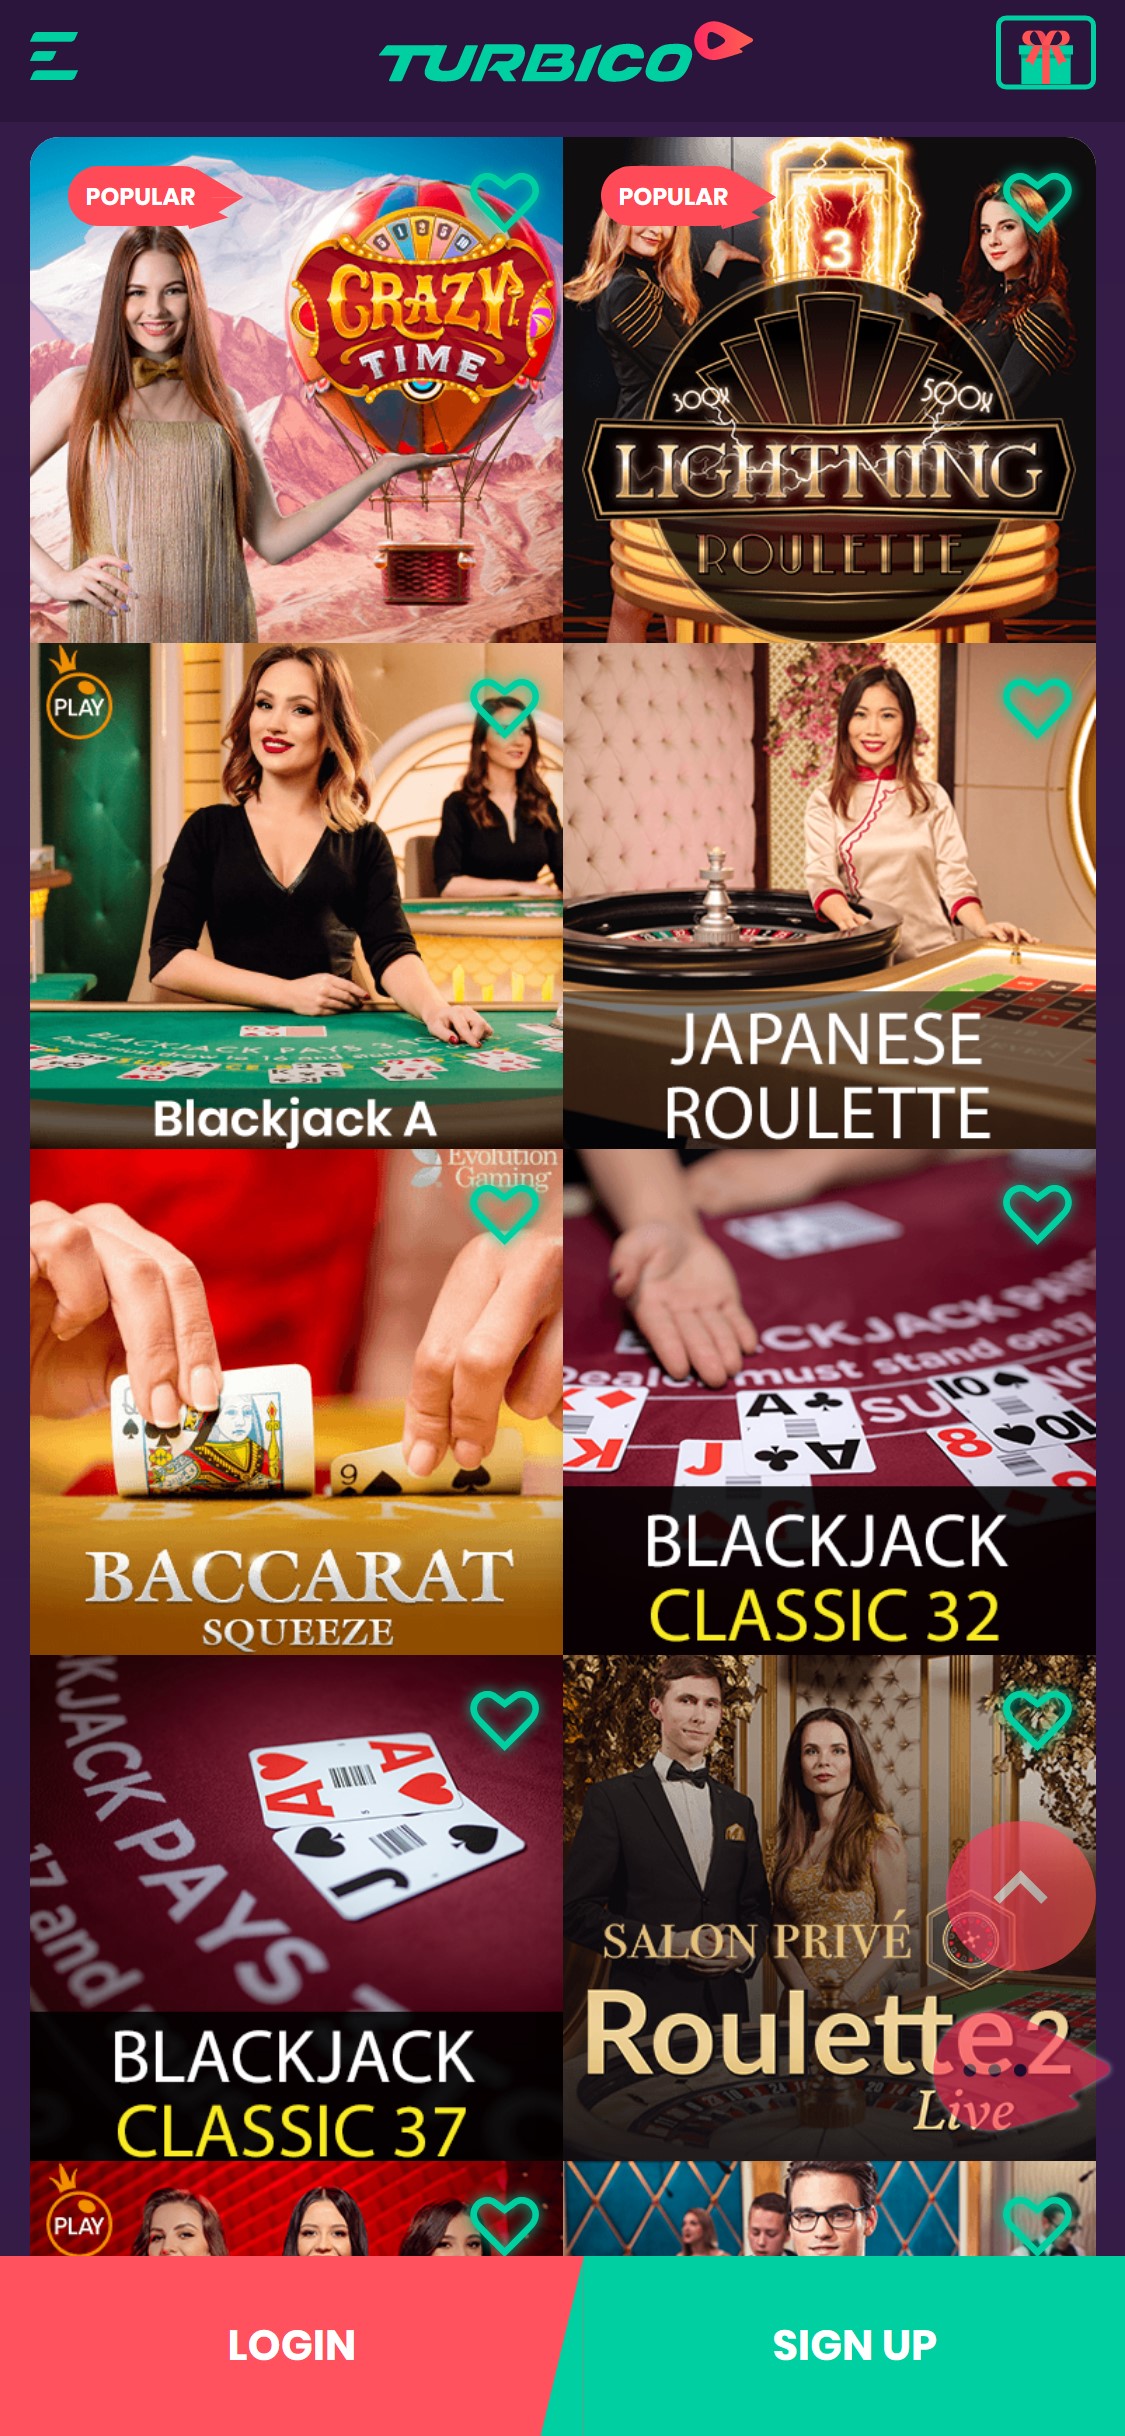 Turbico Casino Mobile Live Dealer Games Review